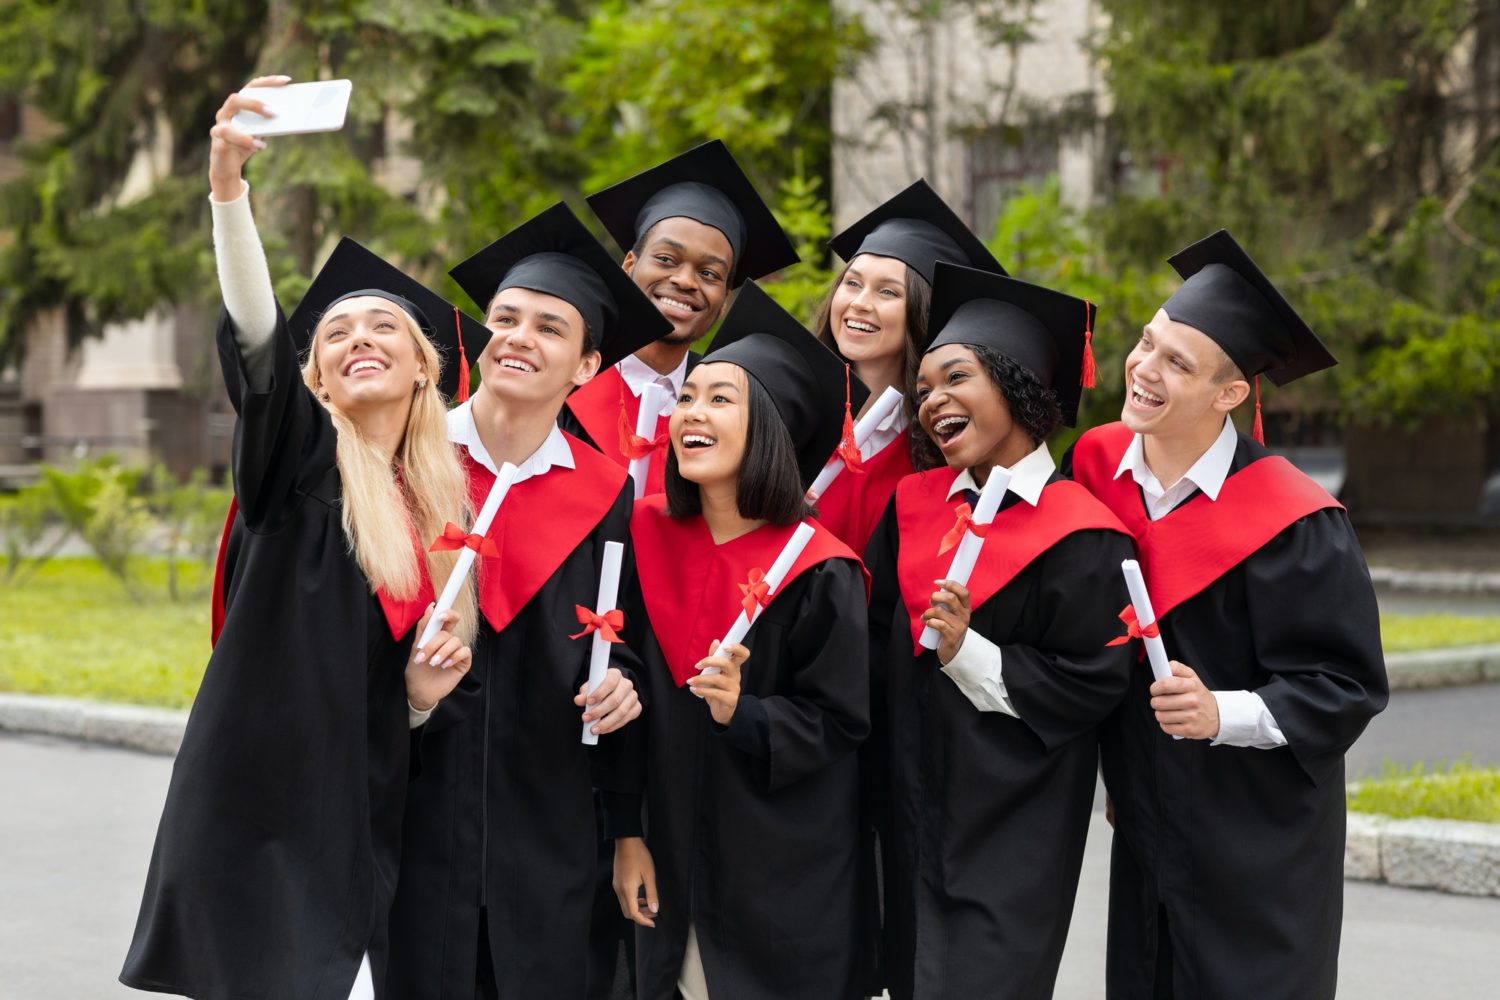 Happy graduates taking selfie together at university campus